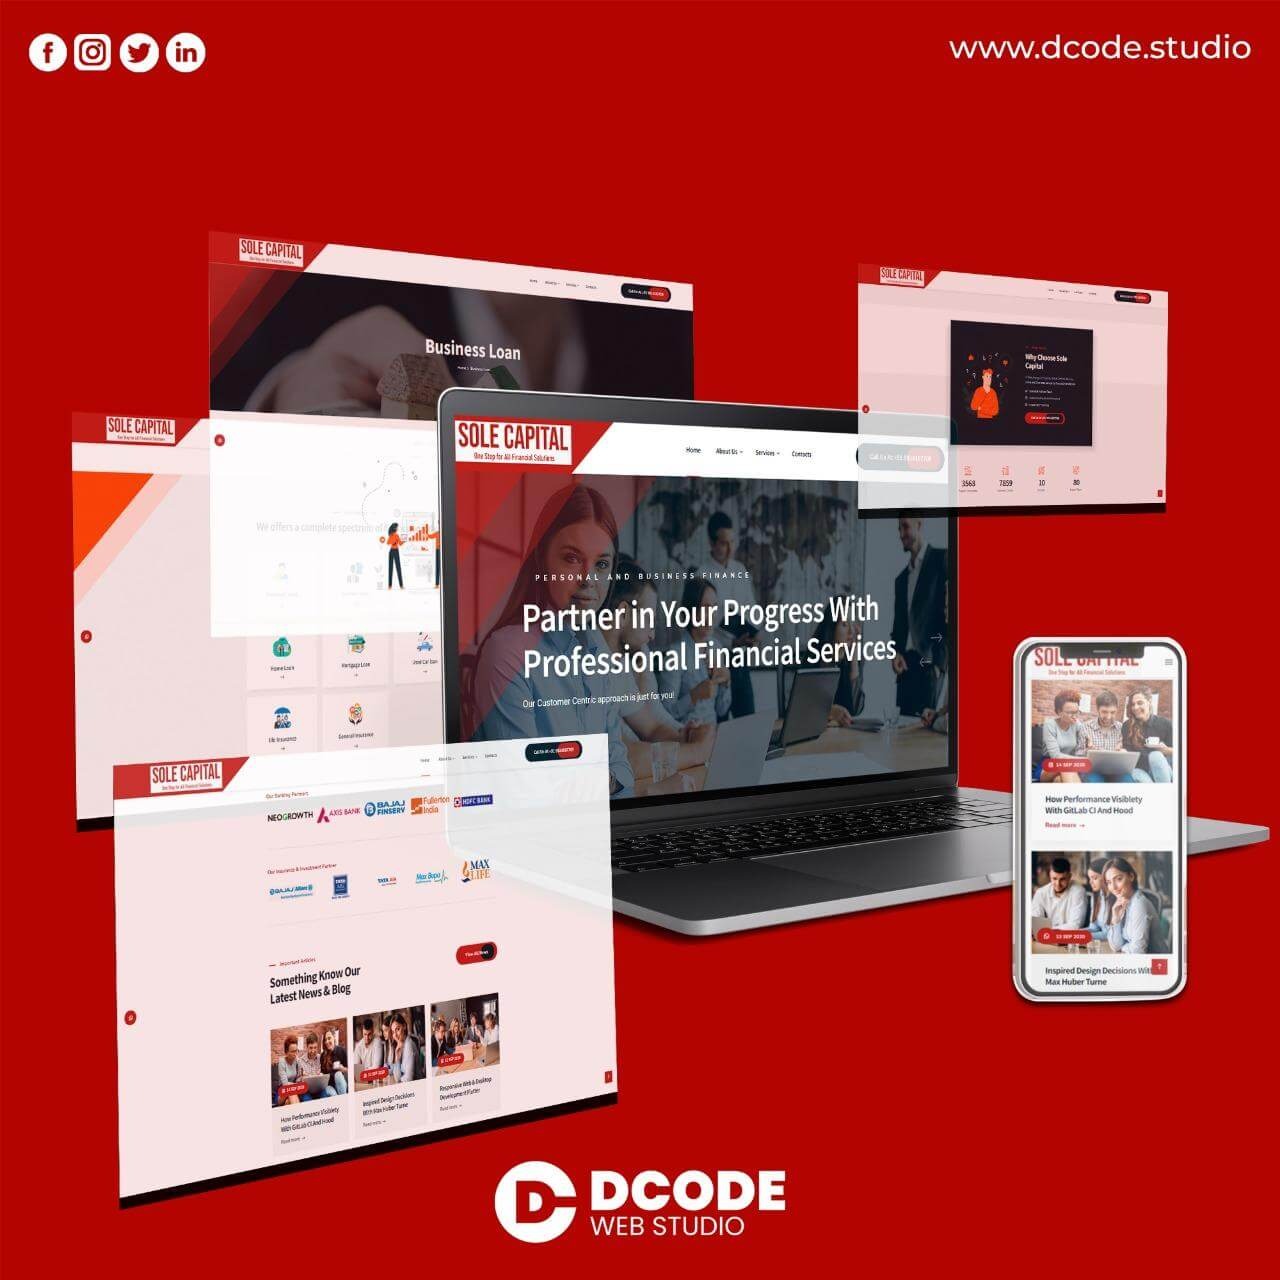 Sole Capital Website Mockup in Laptop, Mobile, and Tablet sizes, Sole Capital Website Mockup created by Dcode Web Studio, Sole Capital Website Designed and Developed by Dcode Web Studio Ahmedabad